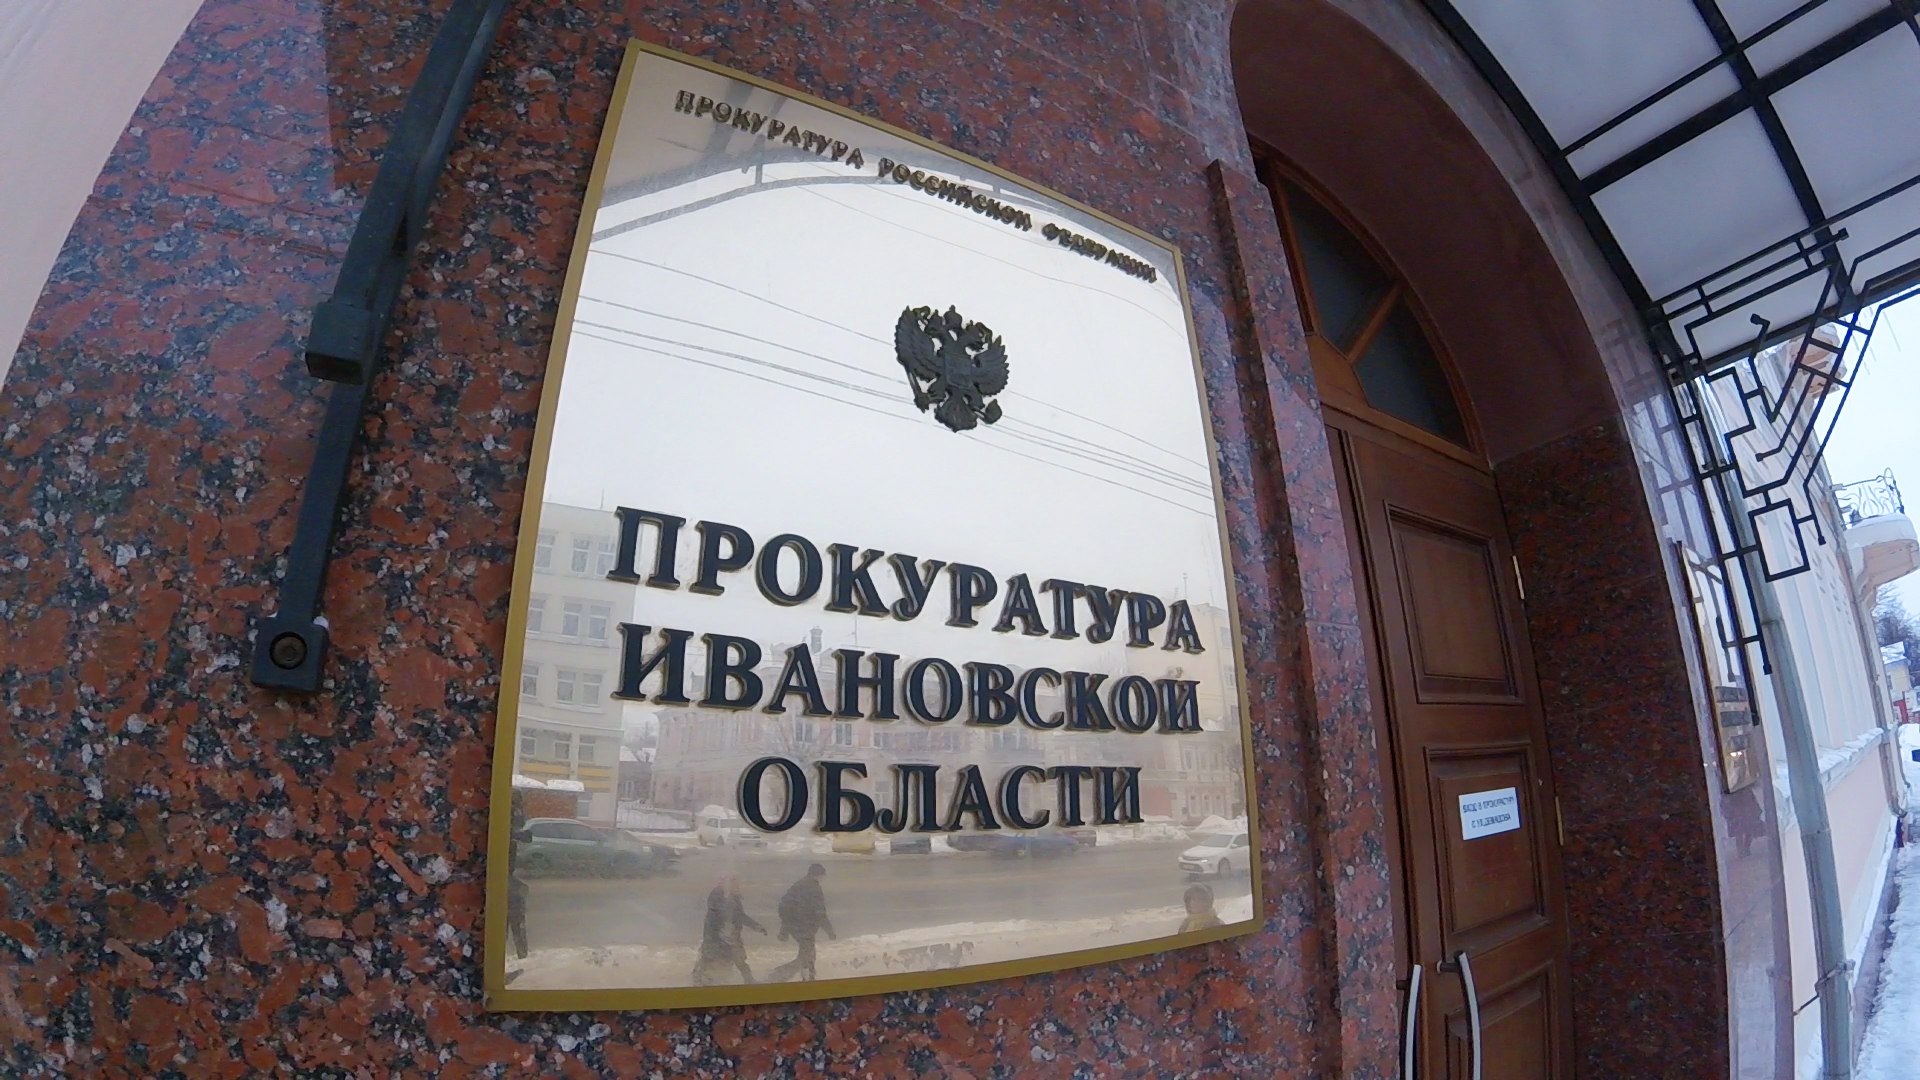 Ивановца оштрафовали за нарушение авторских прав